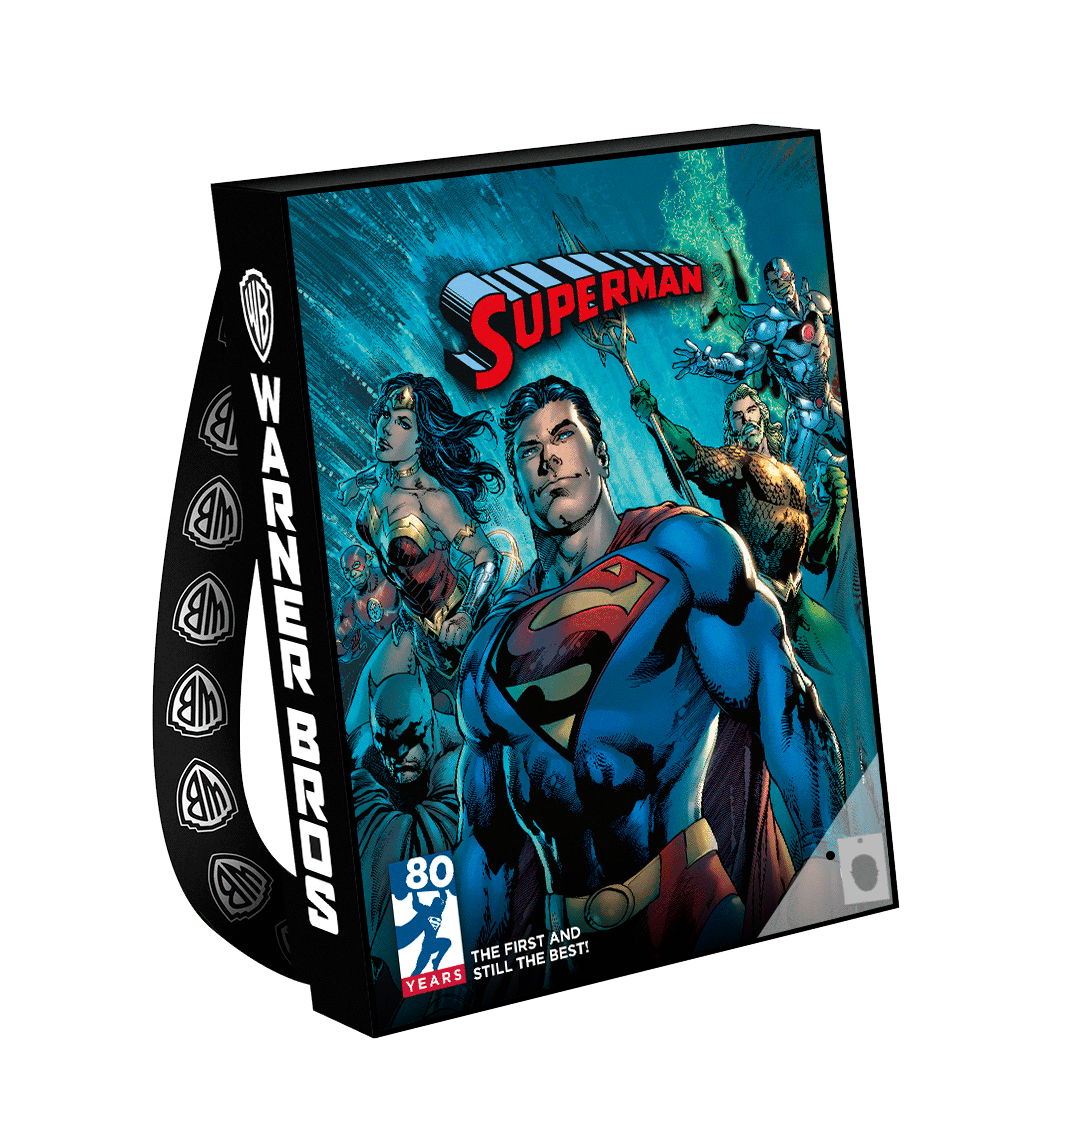 SDCC Exclusive Warner Brothers Bag - Man of Steel Superman 